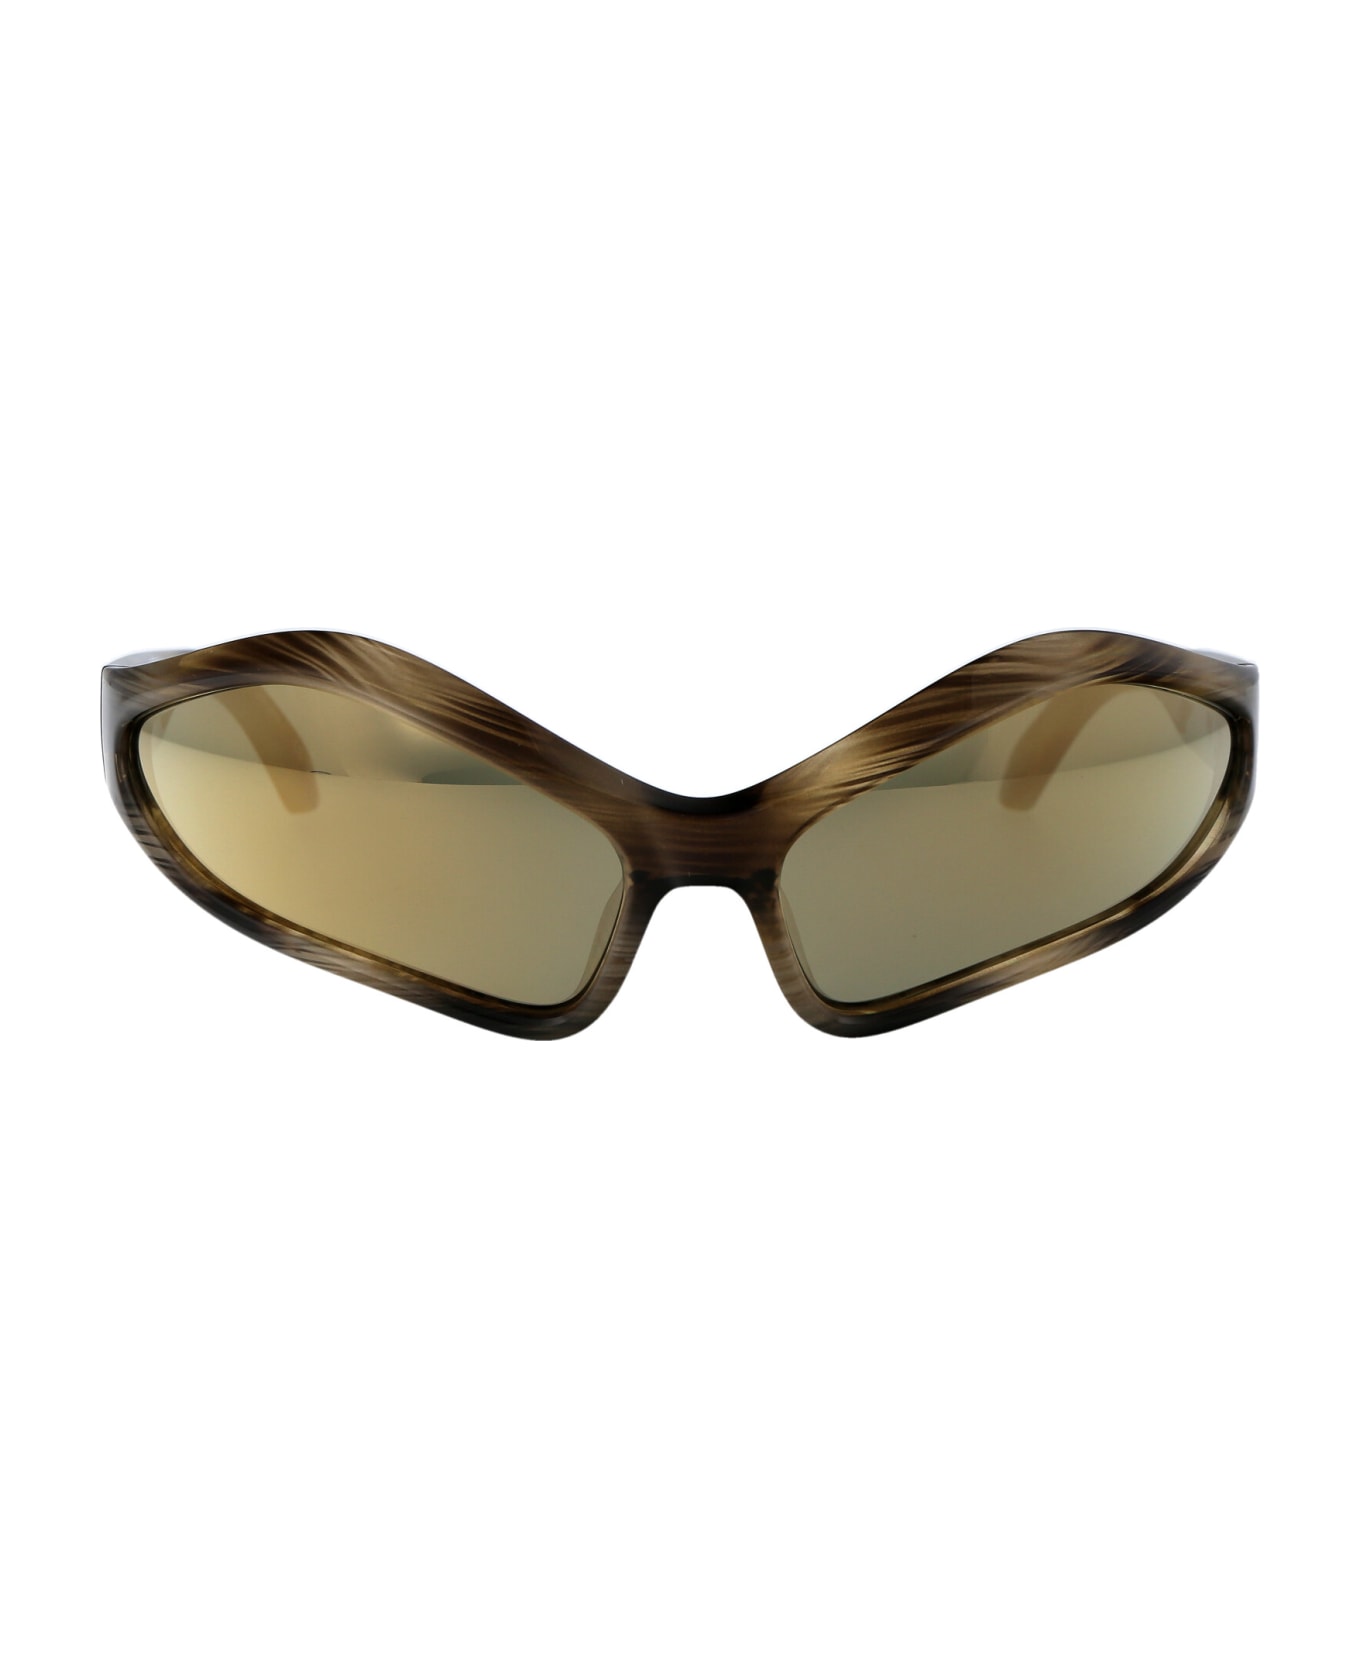 Balenciaga Eyewear Bb0314s Sunglasses - 003 HAVANA HAVANA BRONZE